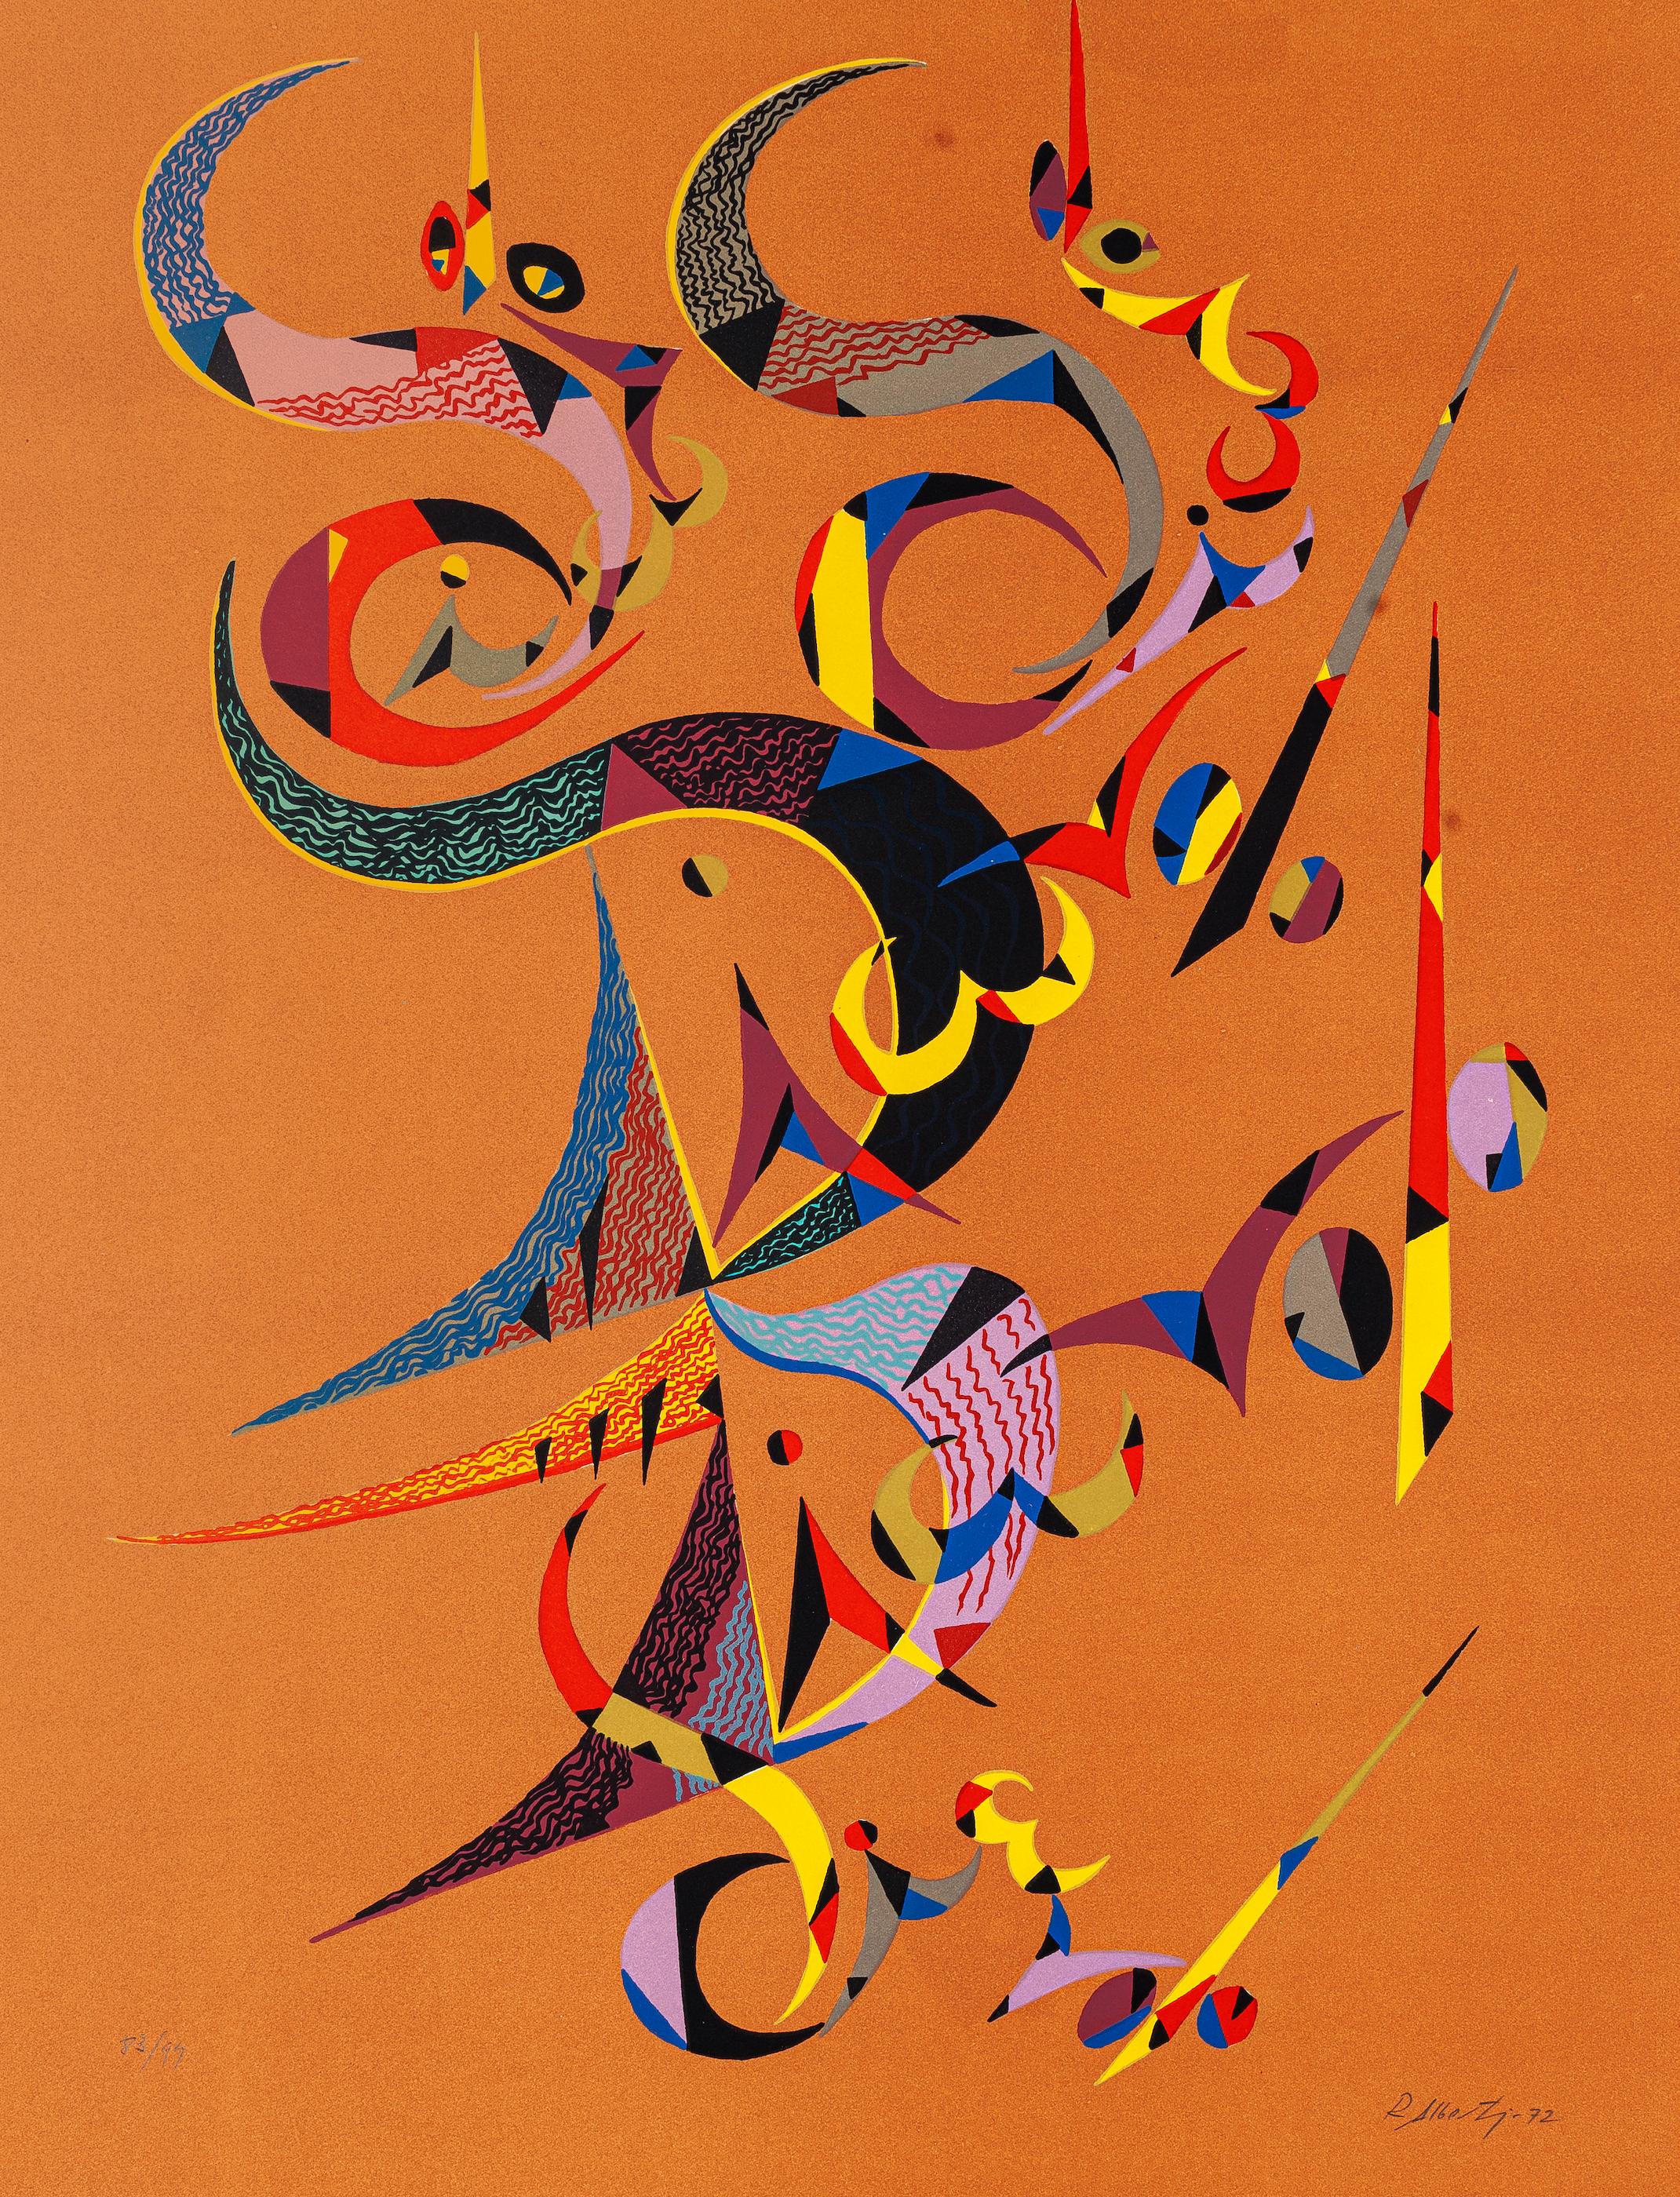 Rafael Alberti Abstract Print - Composition - Original Lithograph by Raphael Alberti - 1972